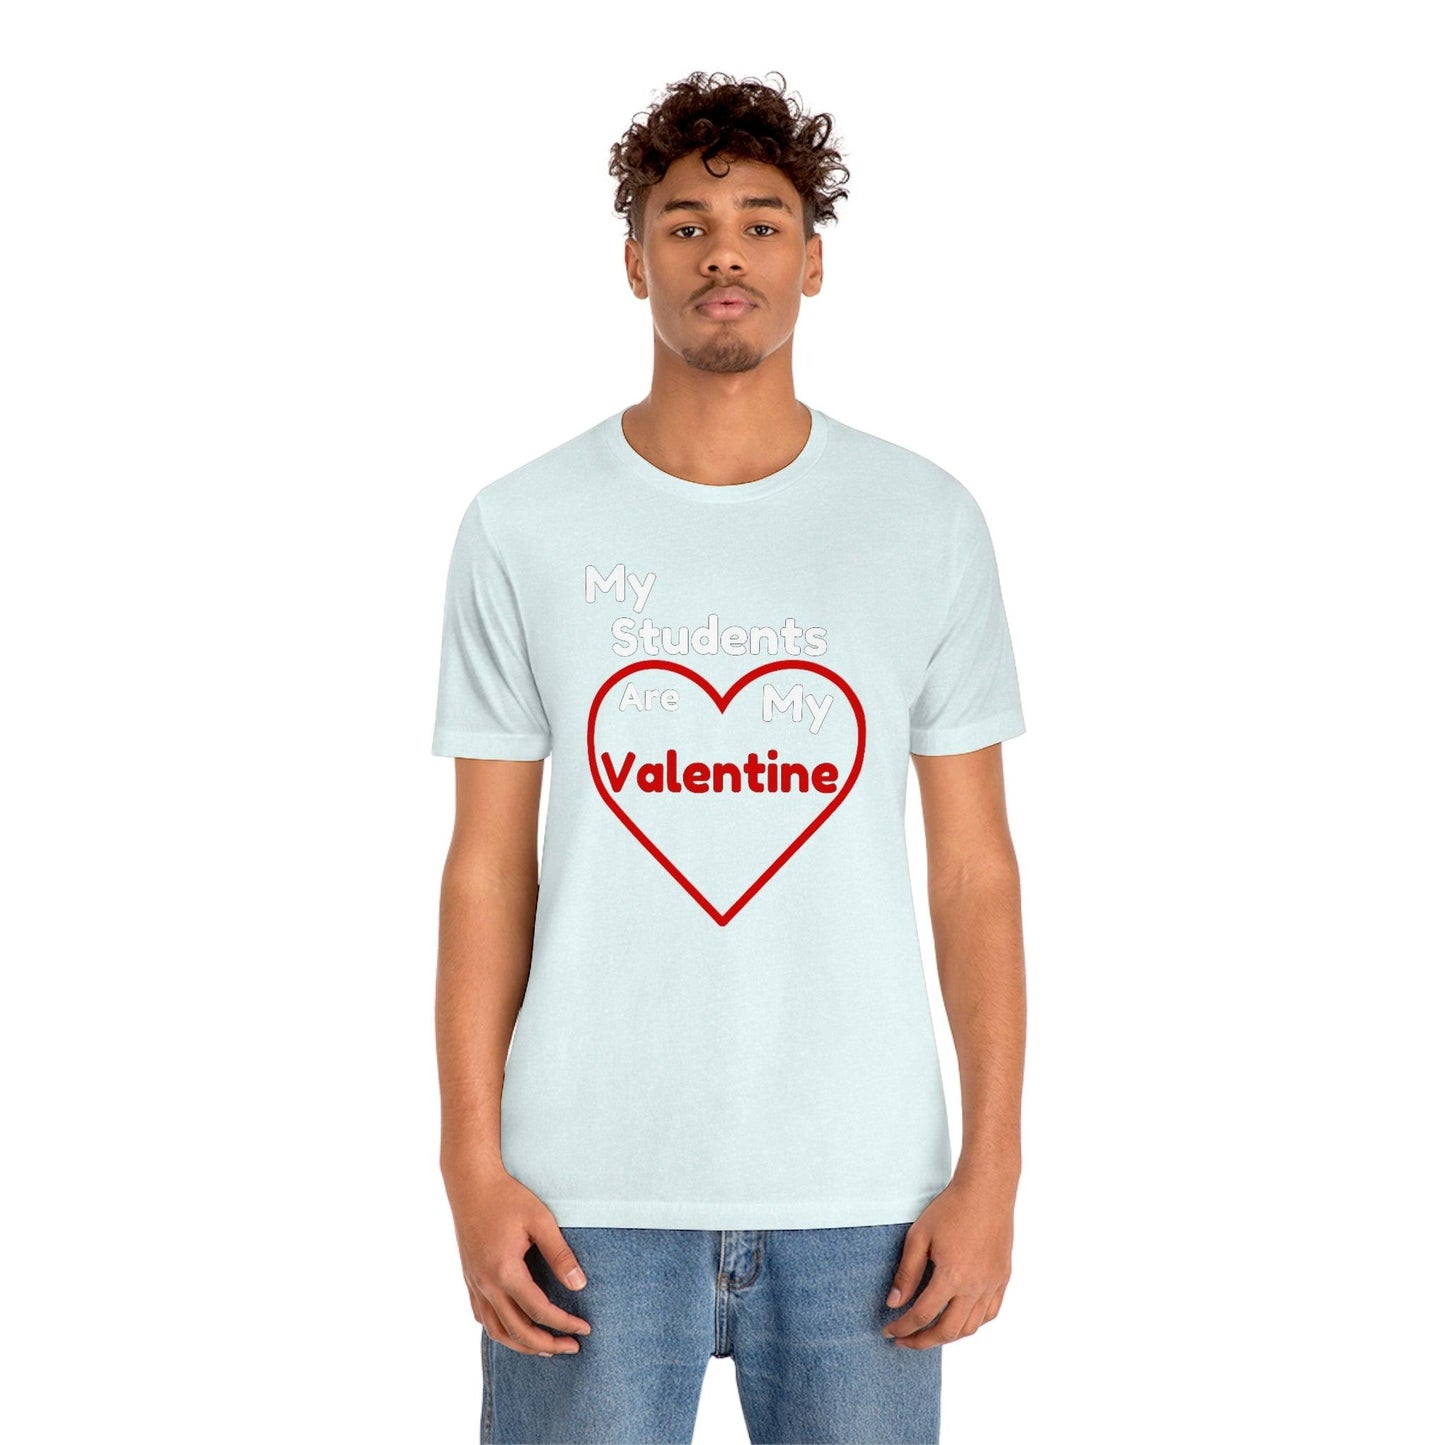 My Students are My Valentine - Gift for teachers - Cute Teacher shirt - Giftsmojo